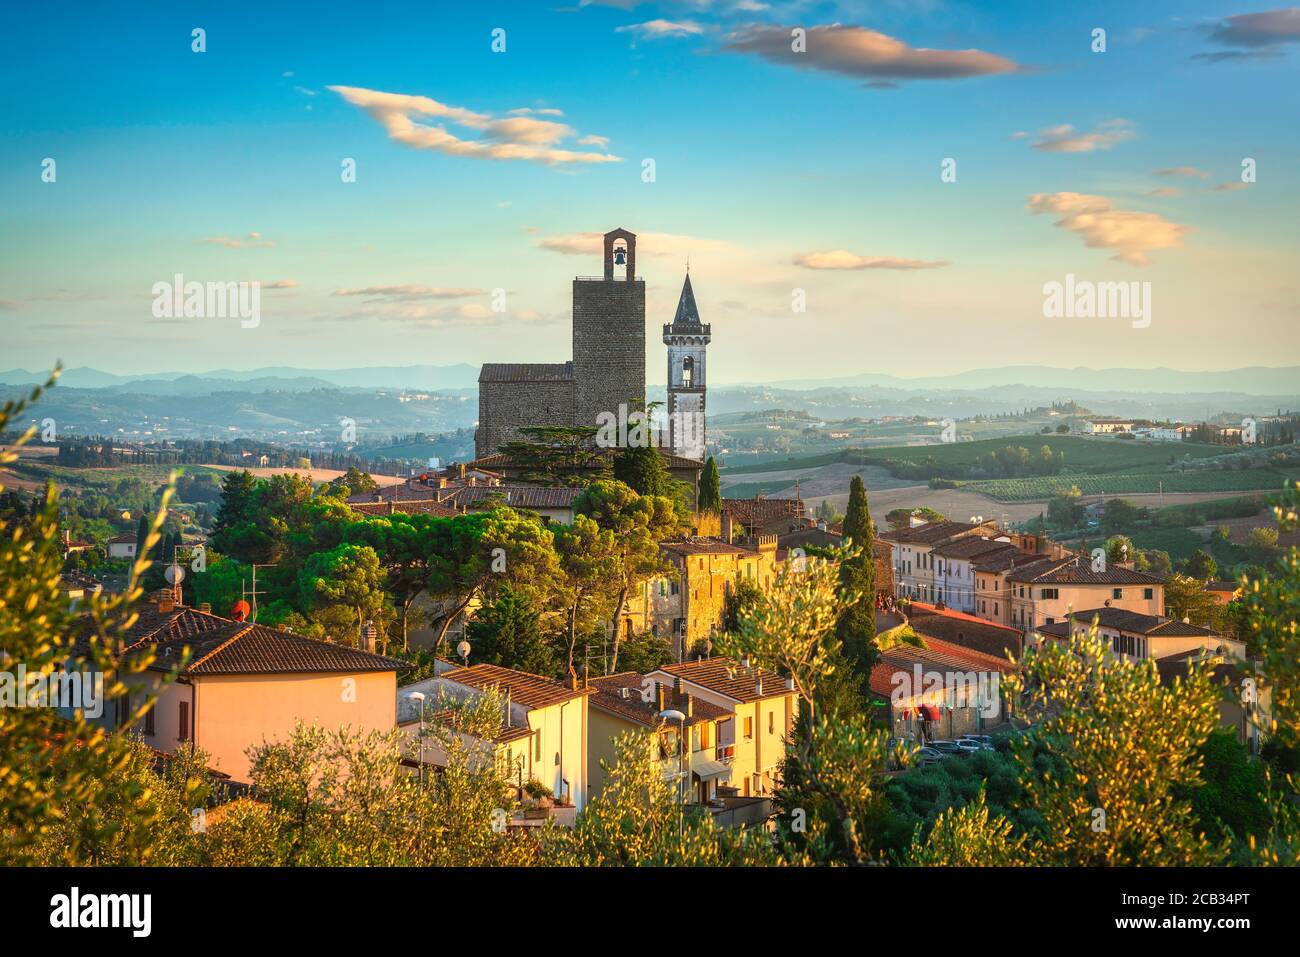 Vinci, Leonardo Geburtsort, Dorf Skyline bei Sonnenuntergang. Florenz, Toskana Italien Europa. Stockfoto